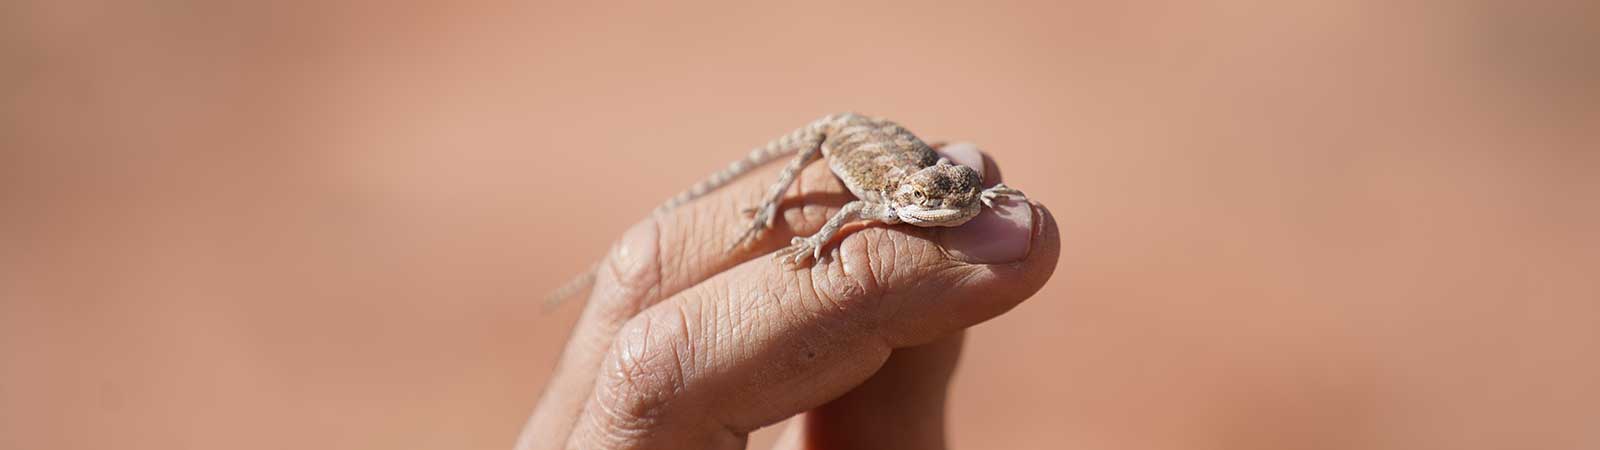 A hand holding a small lizard.